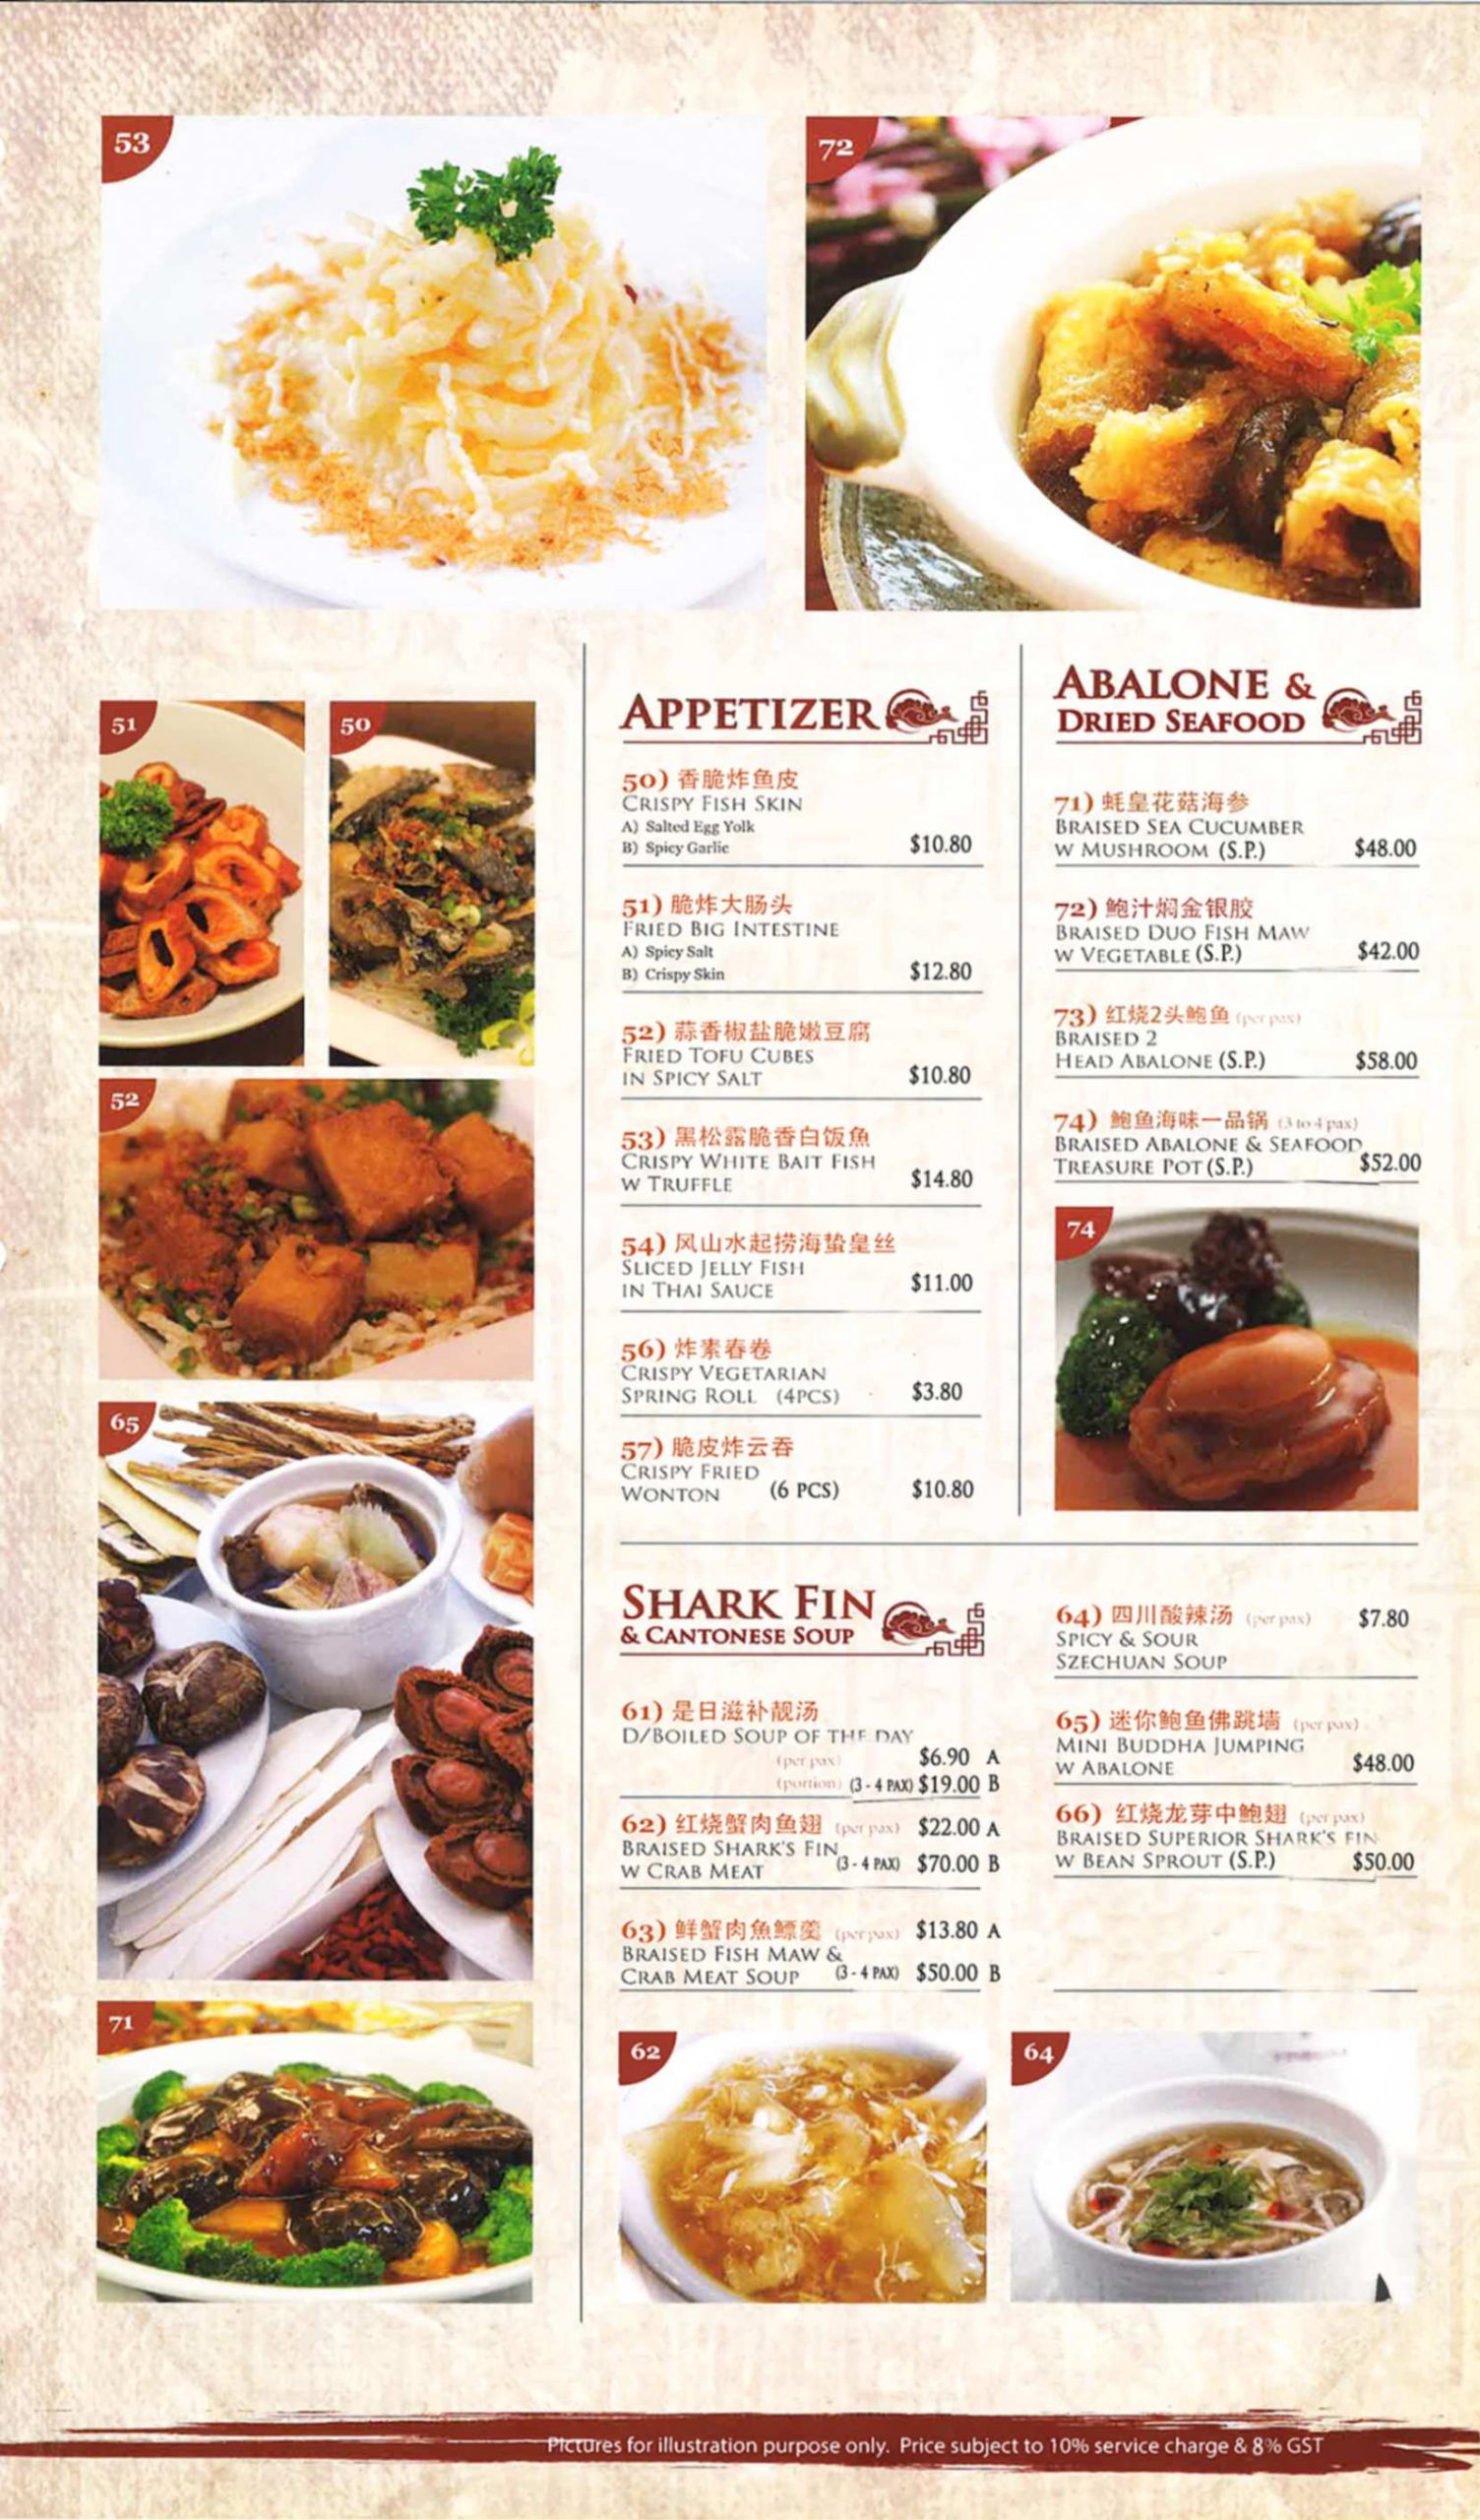 Serving Dim Sum, Peking Duck and Cantonese Cuisine since 1988